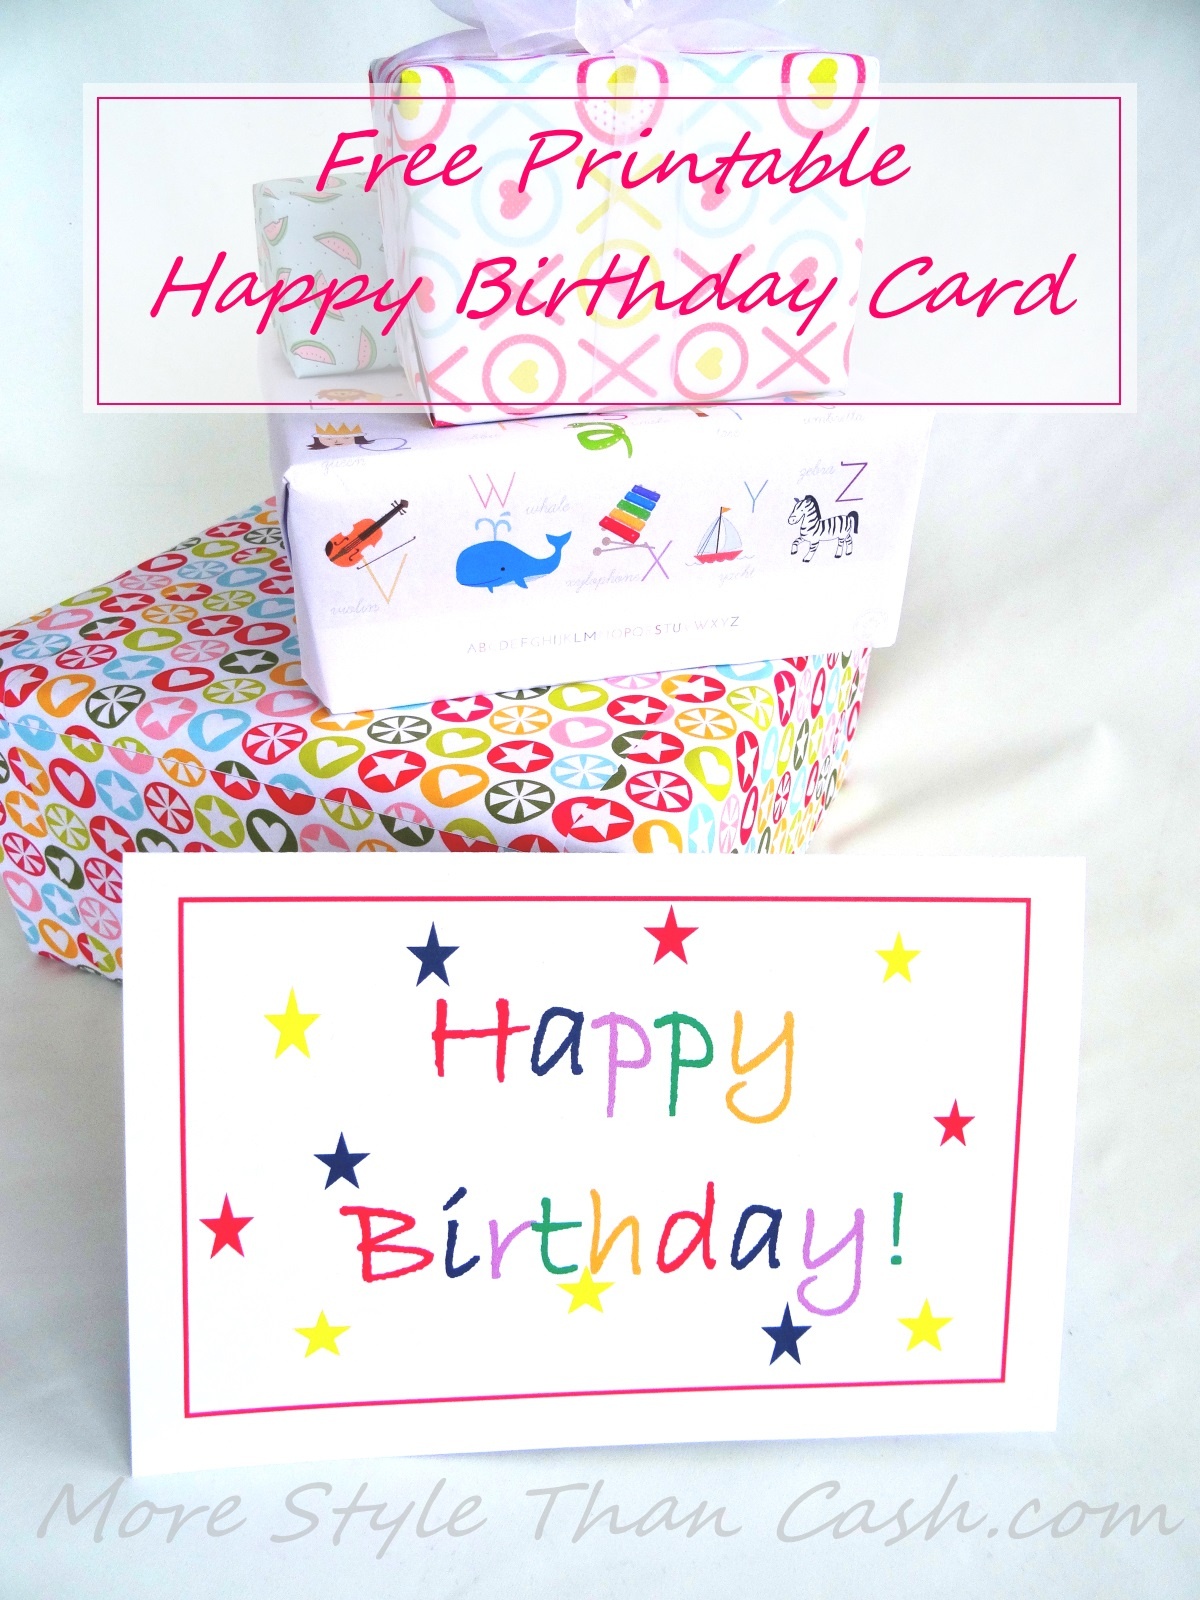 Free Printable Birthday Card - Free Printable Greeting Cards